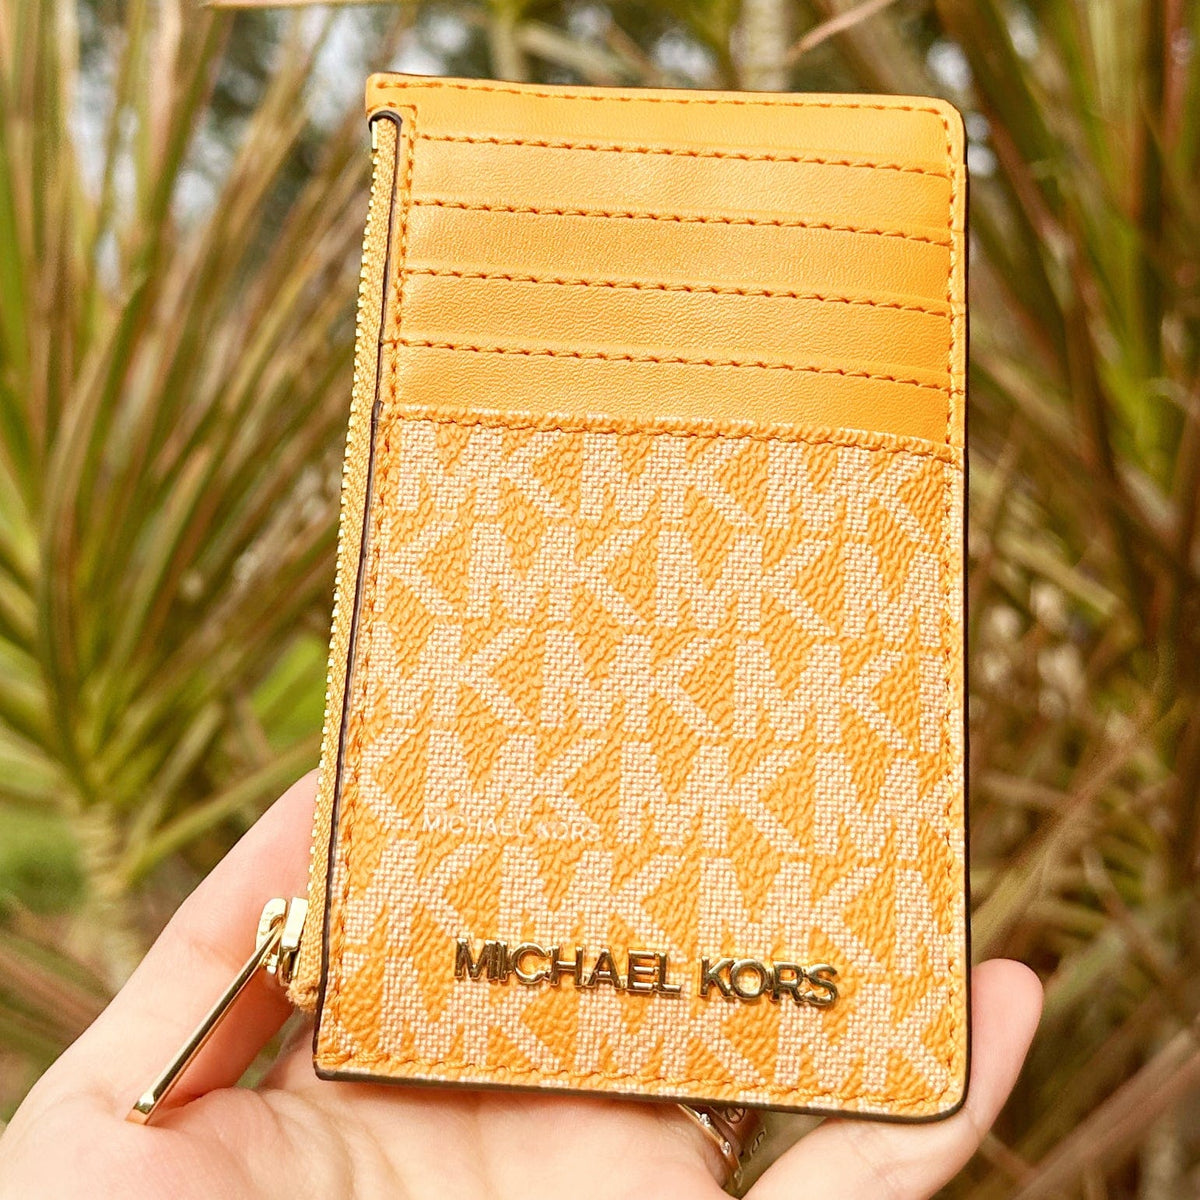 Michael Kors Jet Set Travel Medium Top Zip Card Case Wallet Coin Pouch Rose  Pink